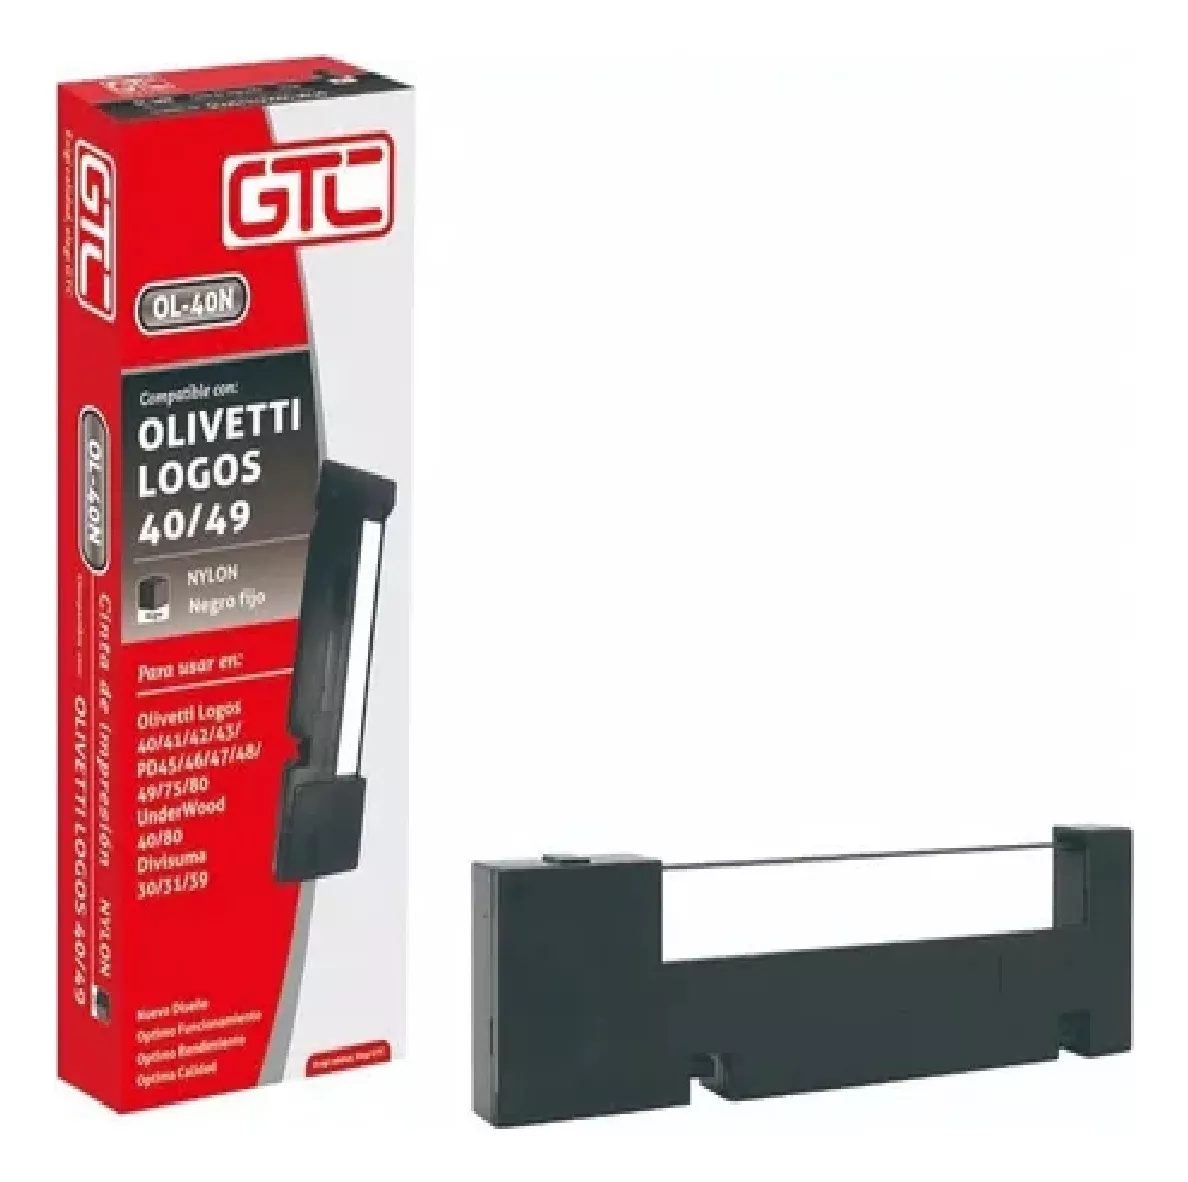 Primera imagen para búsqueda de cinta olivetti pr4 gtc